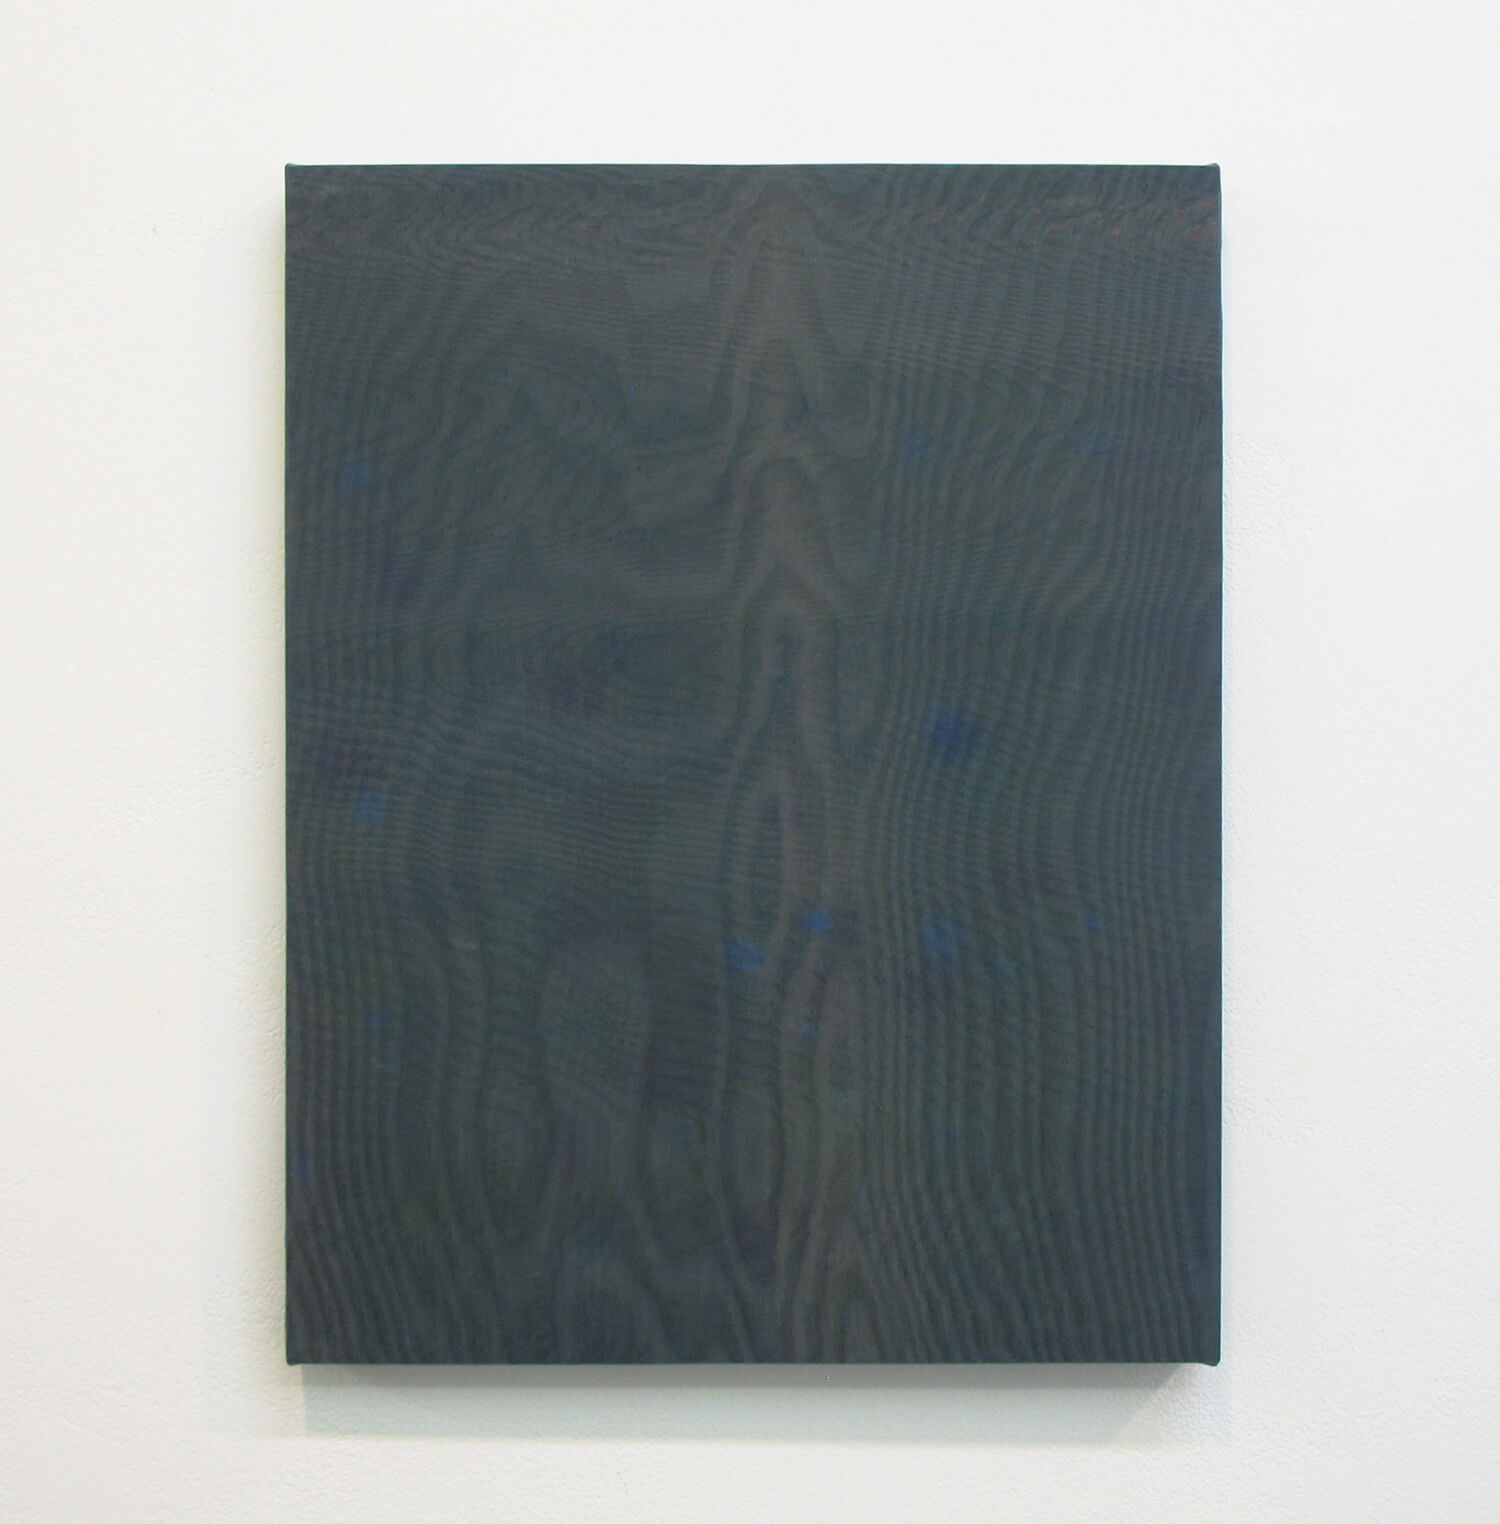 drops #7<br>
Acrylic, glass organdy, cotton, panel 41 x 33 cm 2013<br>¥50,000 - 200,000